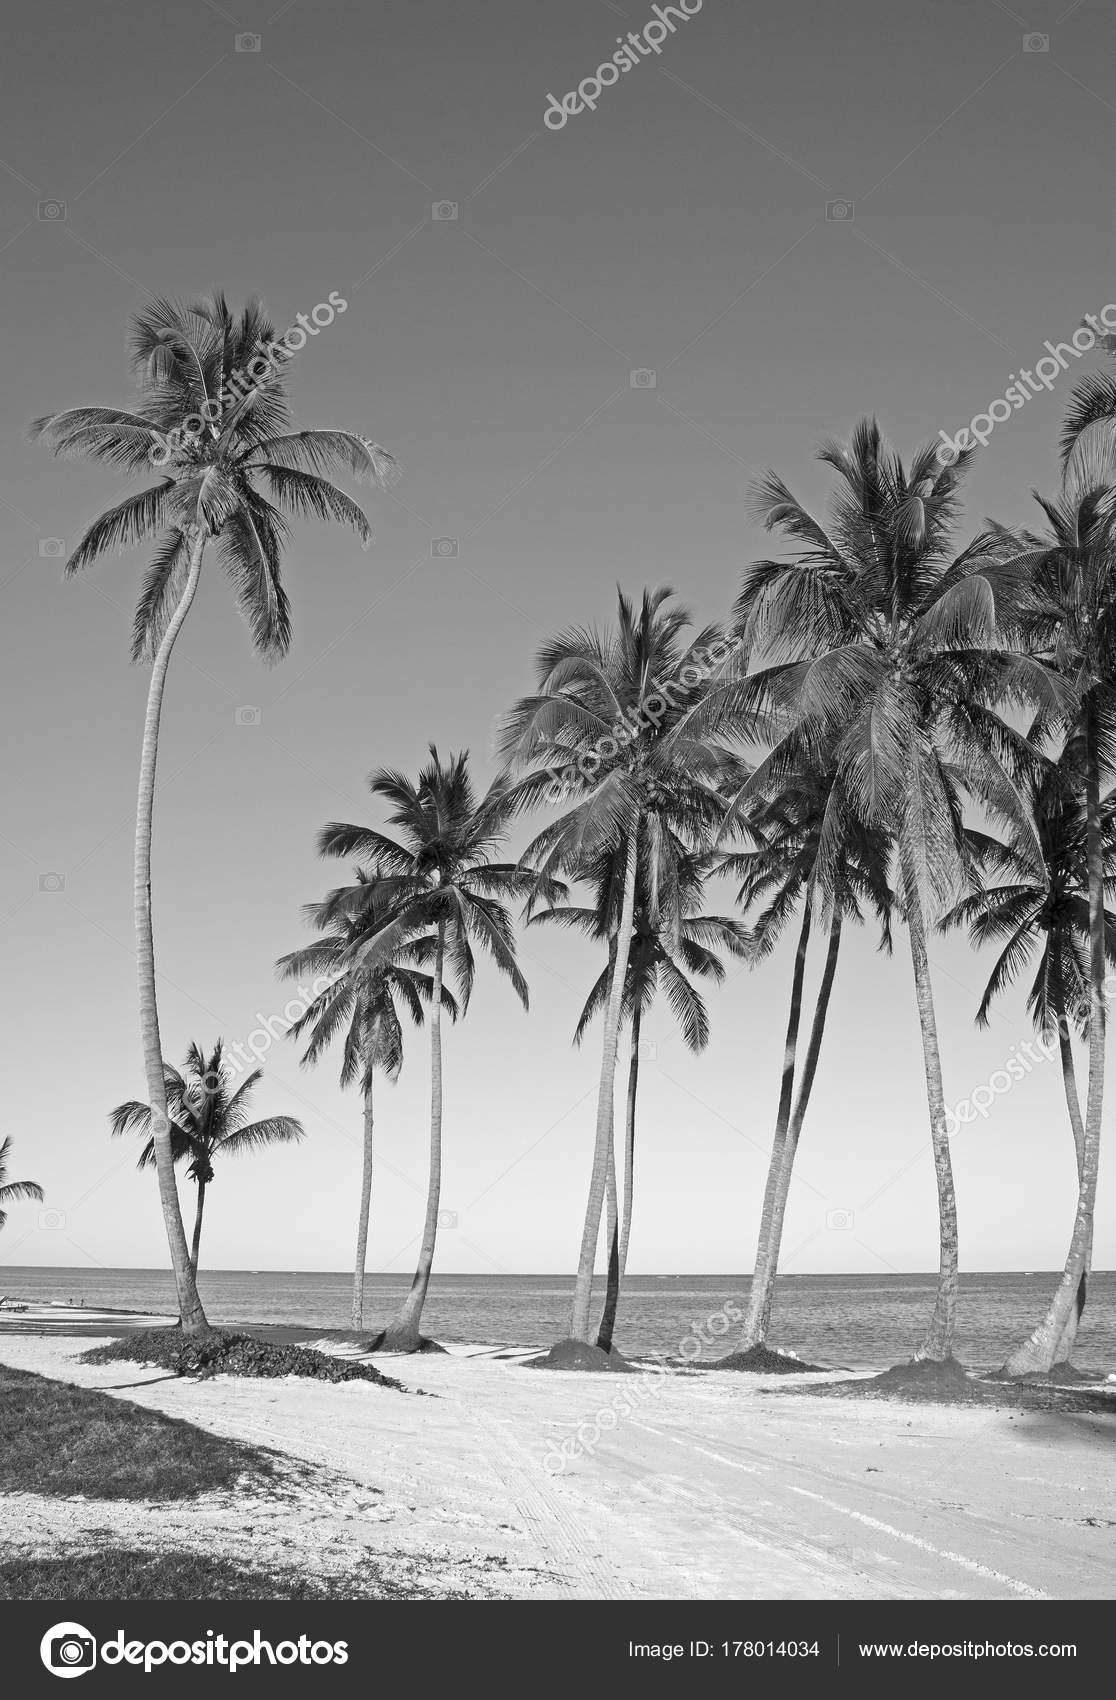 Caribbean Black and White Photographs